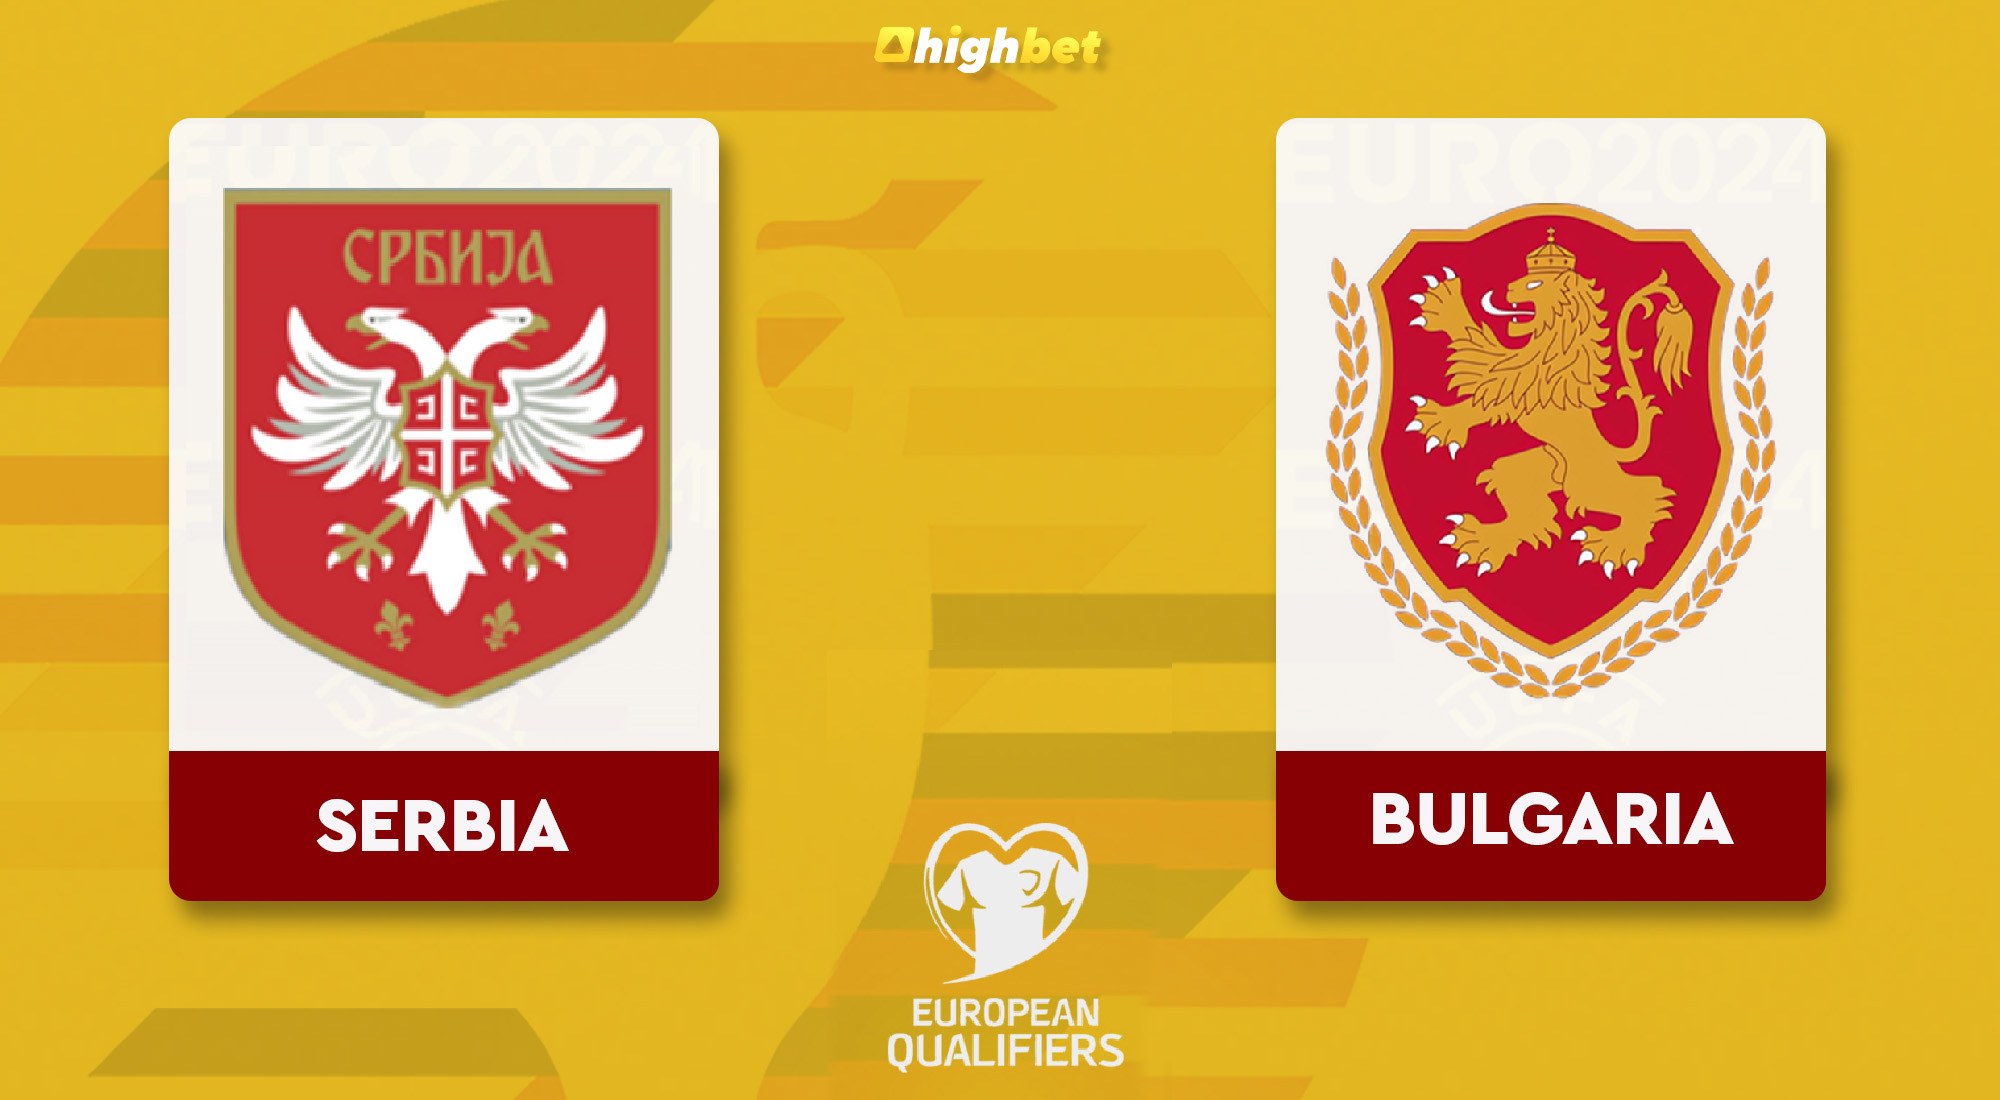 Serbia vs Bulgaria - highbet UEFA Euro Qualification Pre-Match Analysis